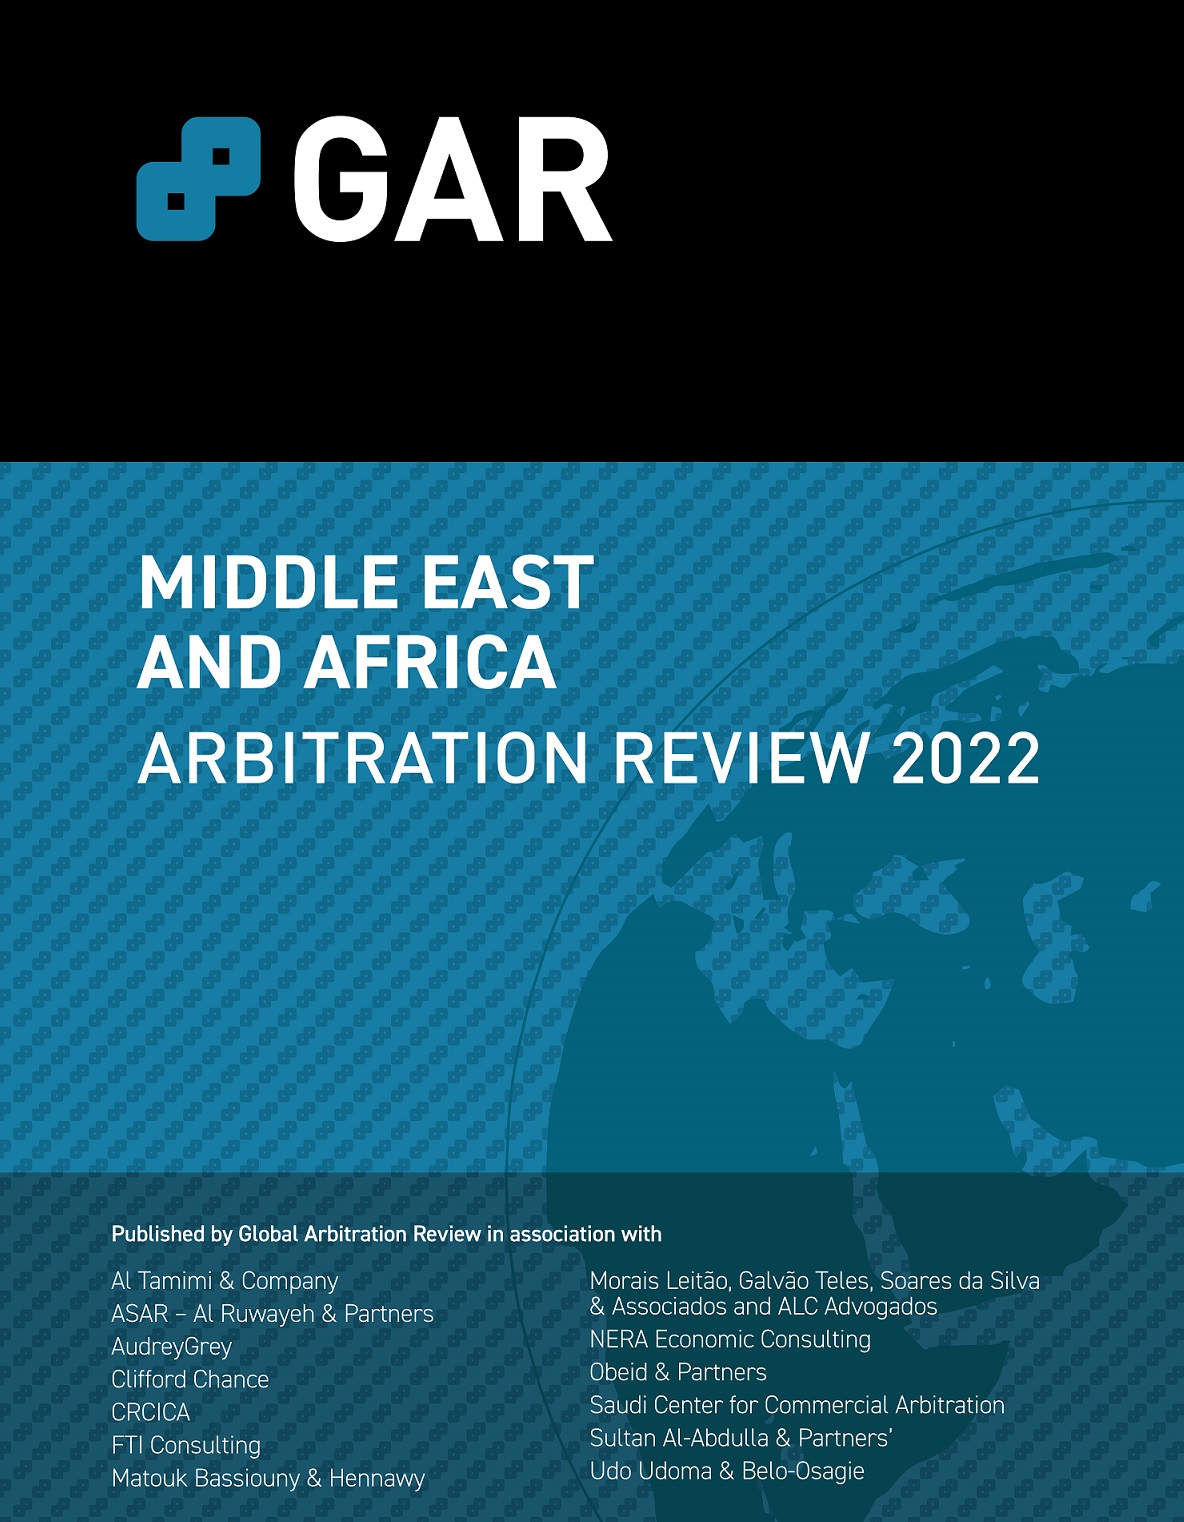 SCCA: Saudi Arabia has become a world class arbitration seat